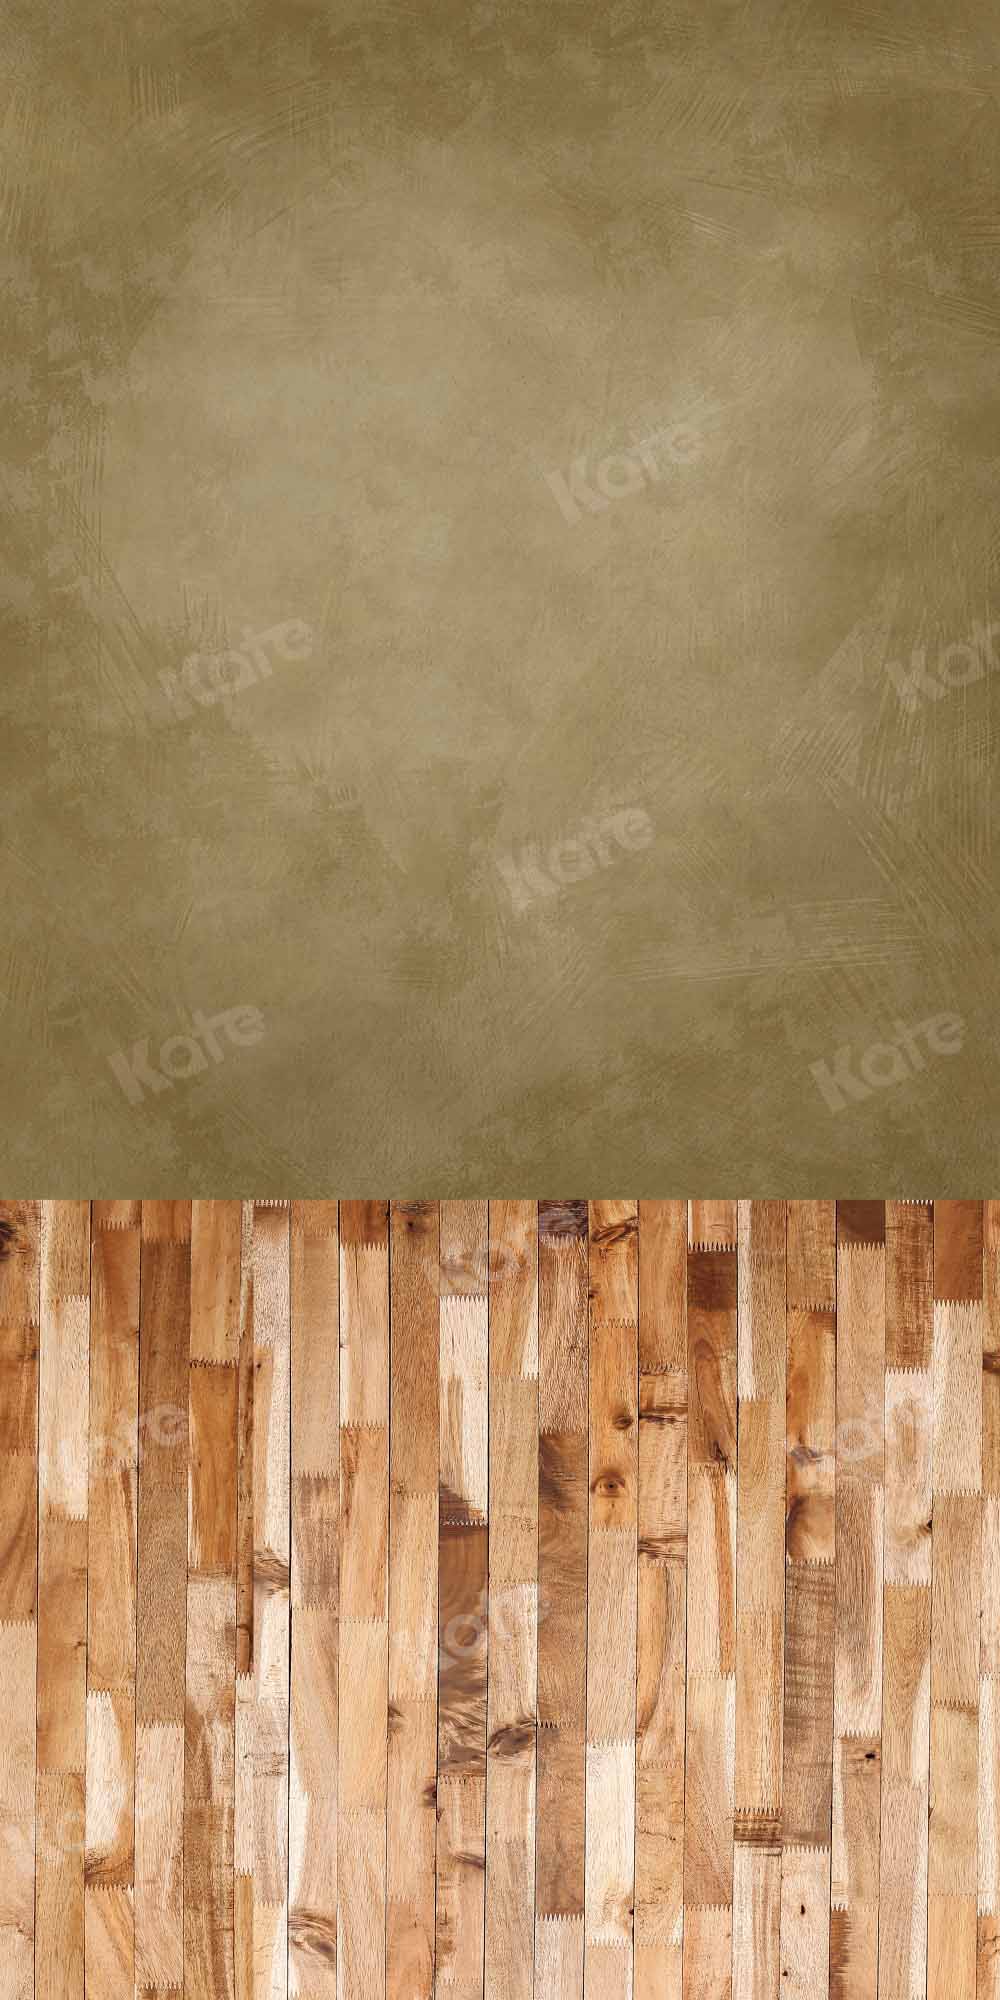 Kate Kombibackdrop Braun abstrakt Holz Hintergrund